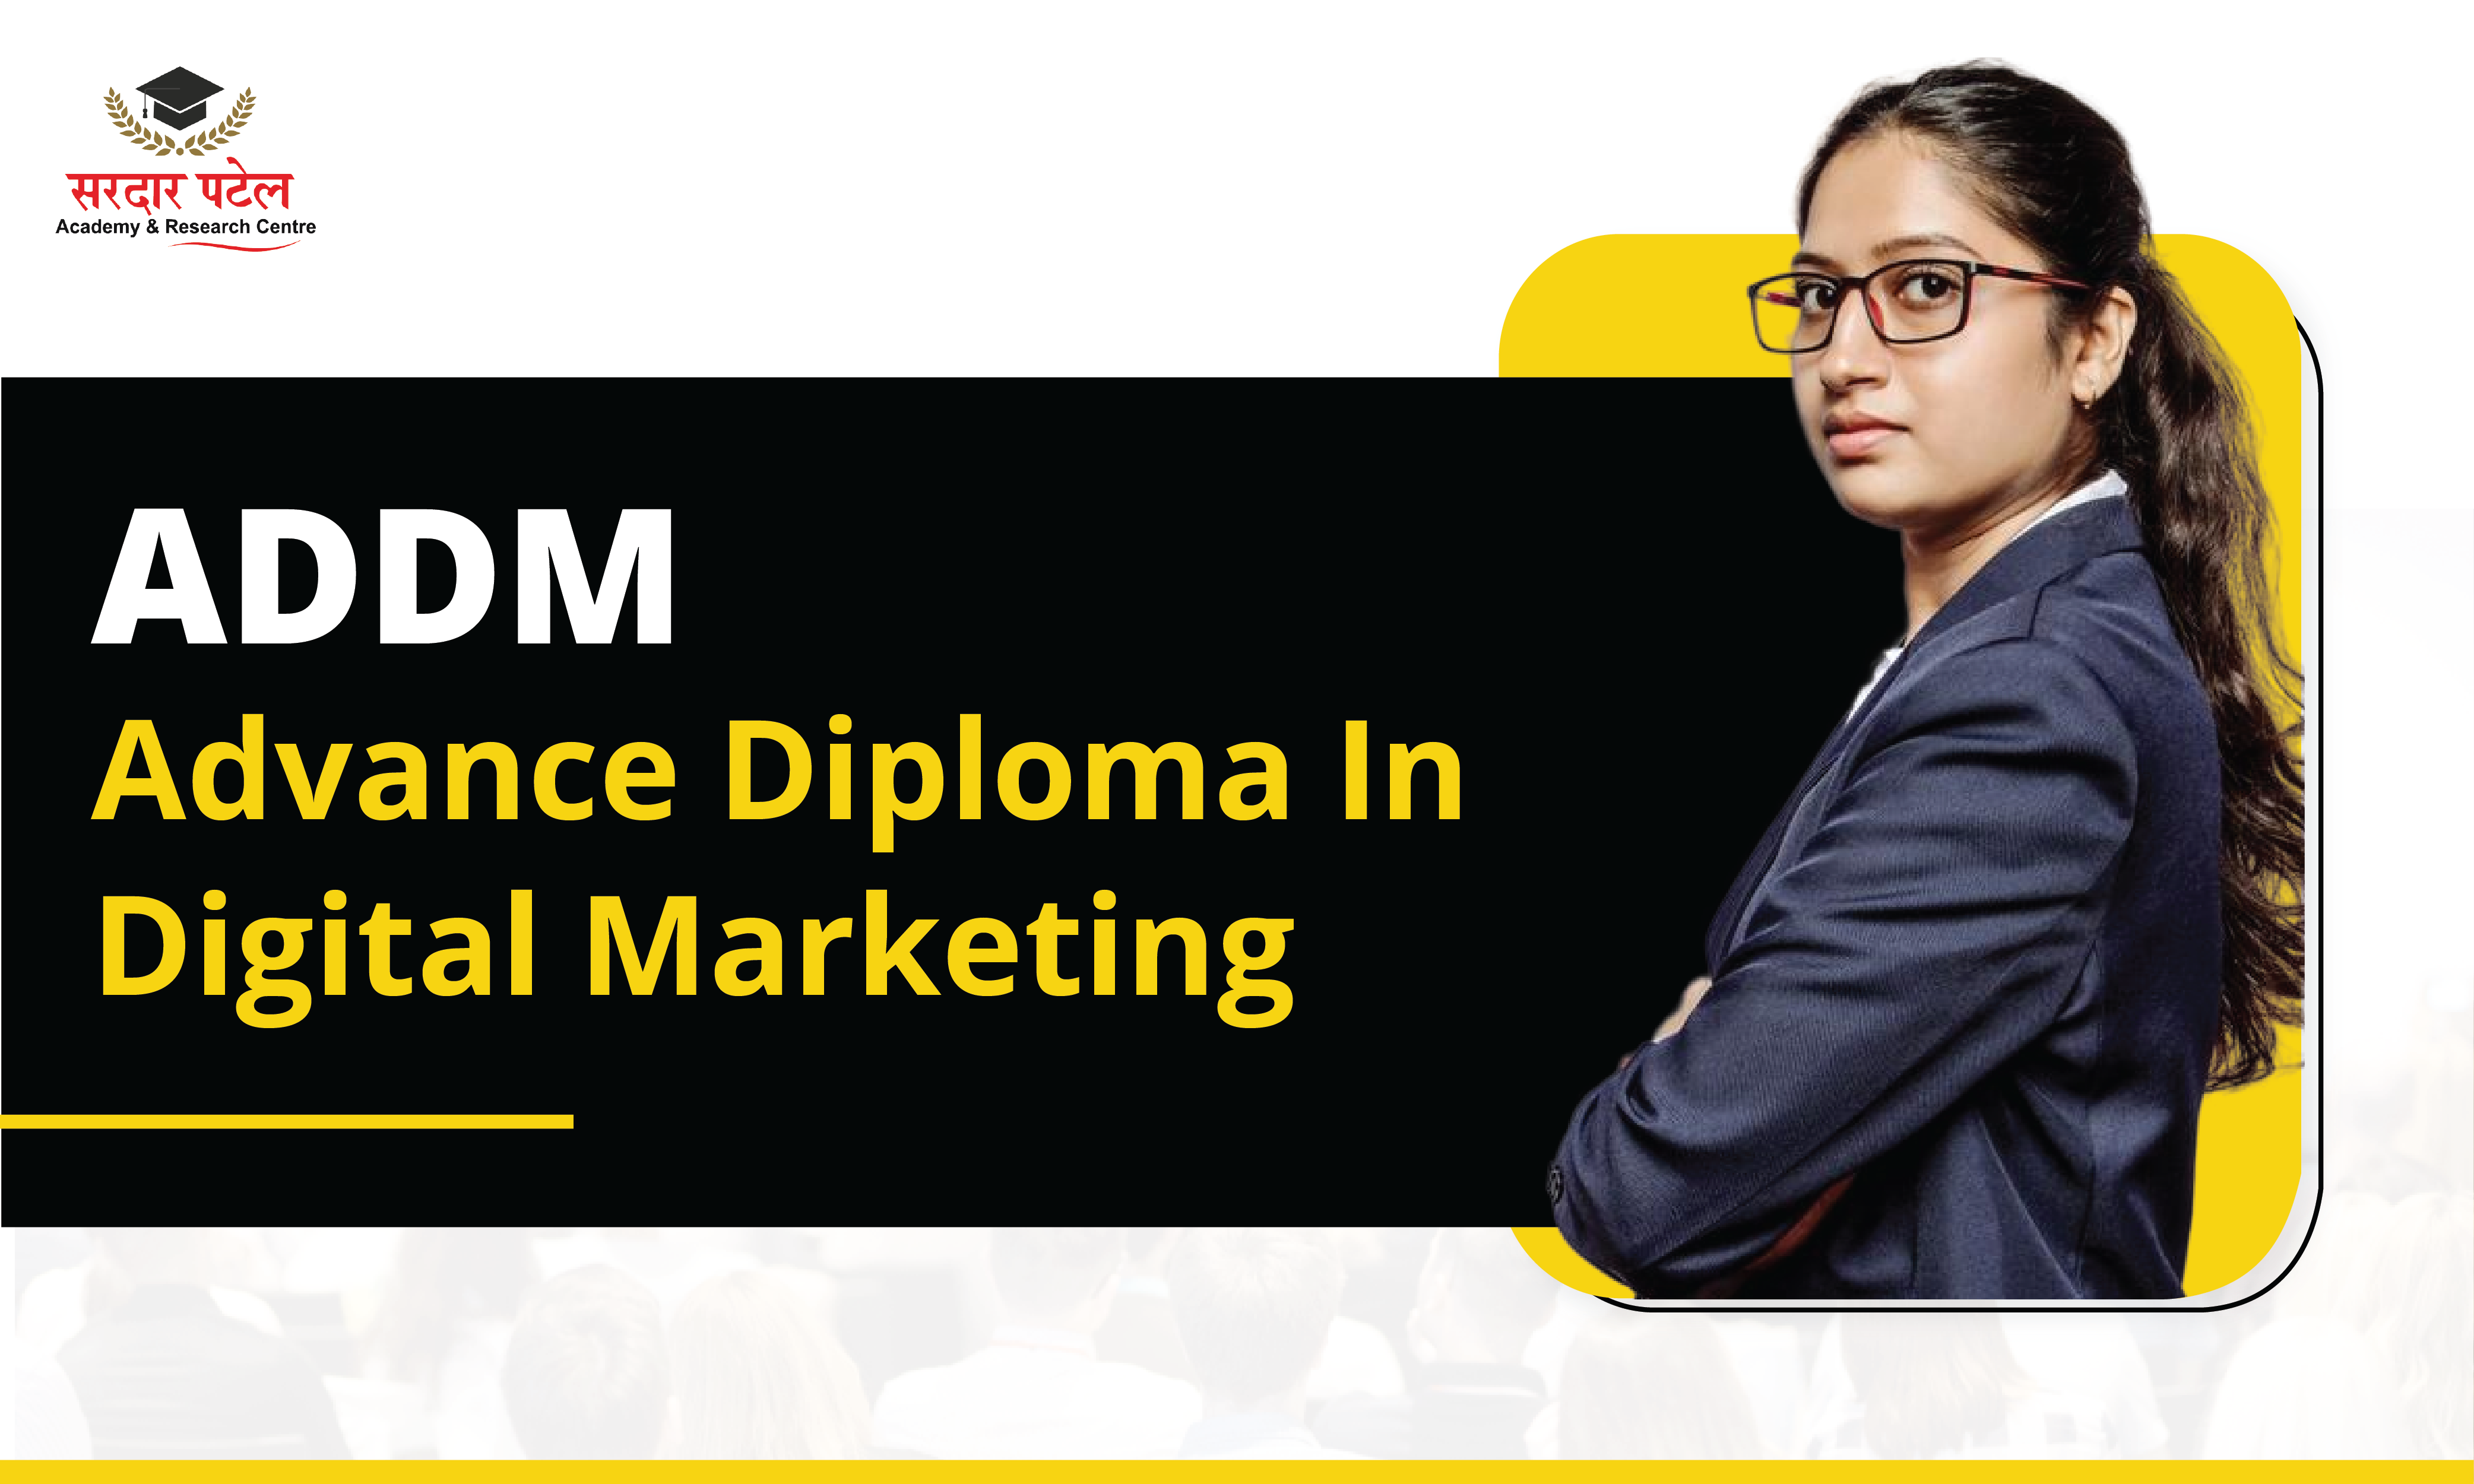 Advance Diploma In Digital Marketing - ADDM